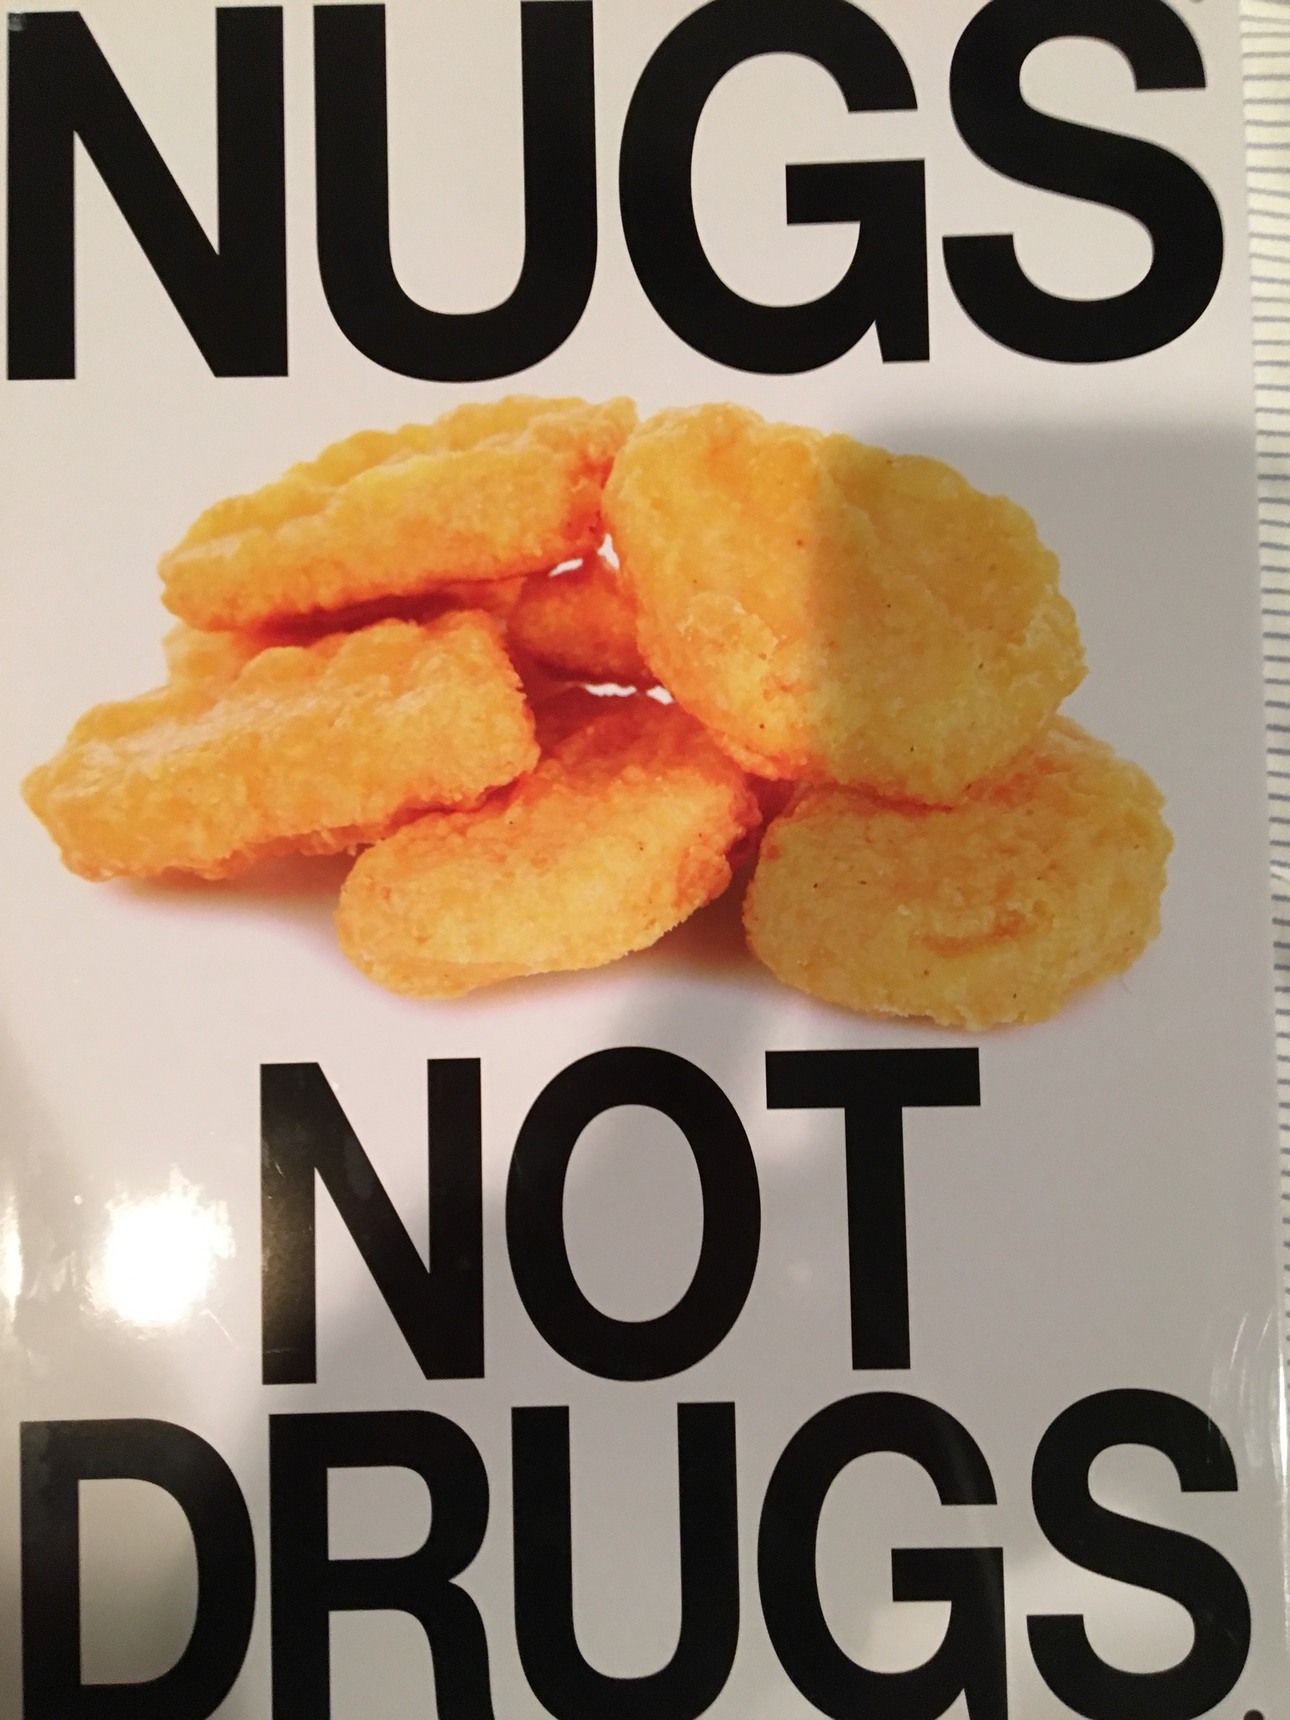 Chiken nugs not drugs - meme